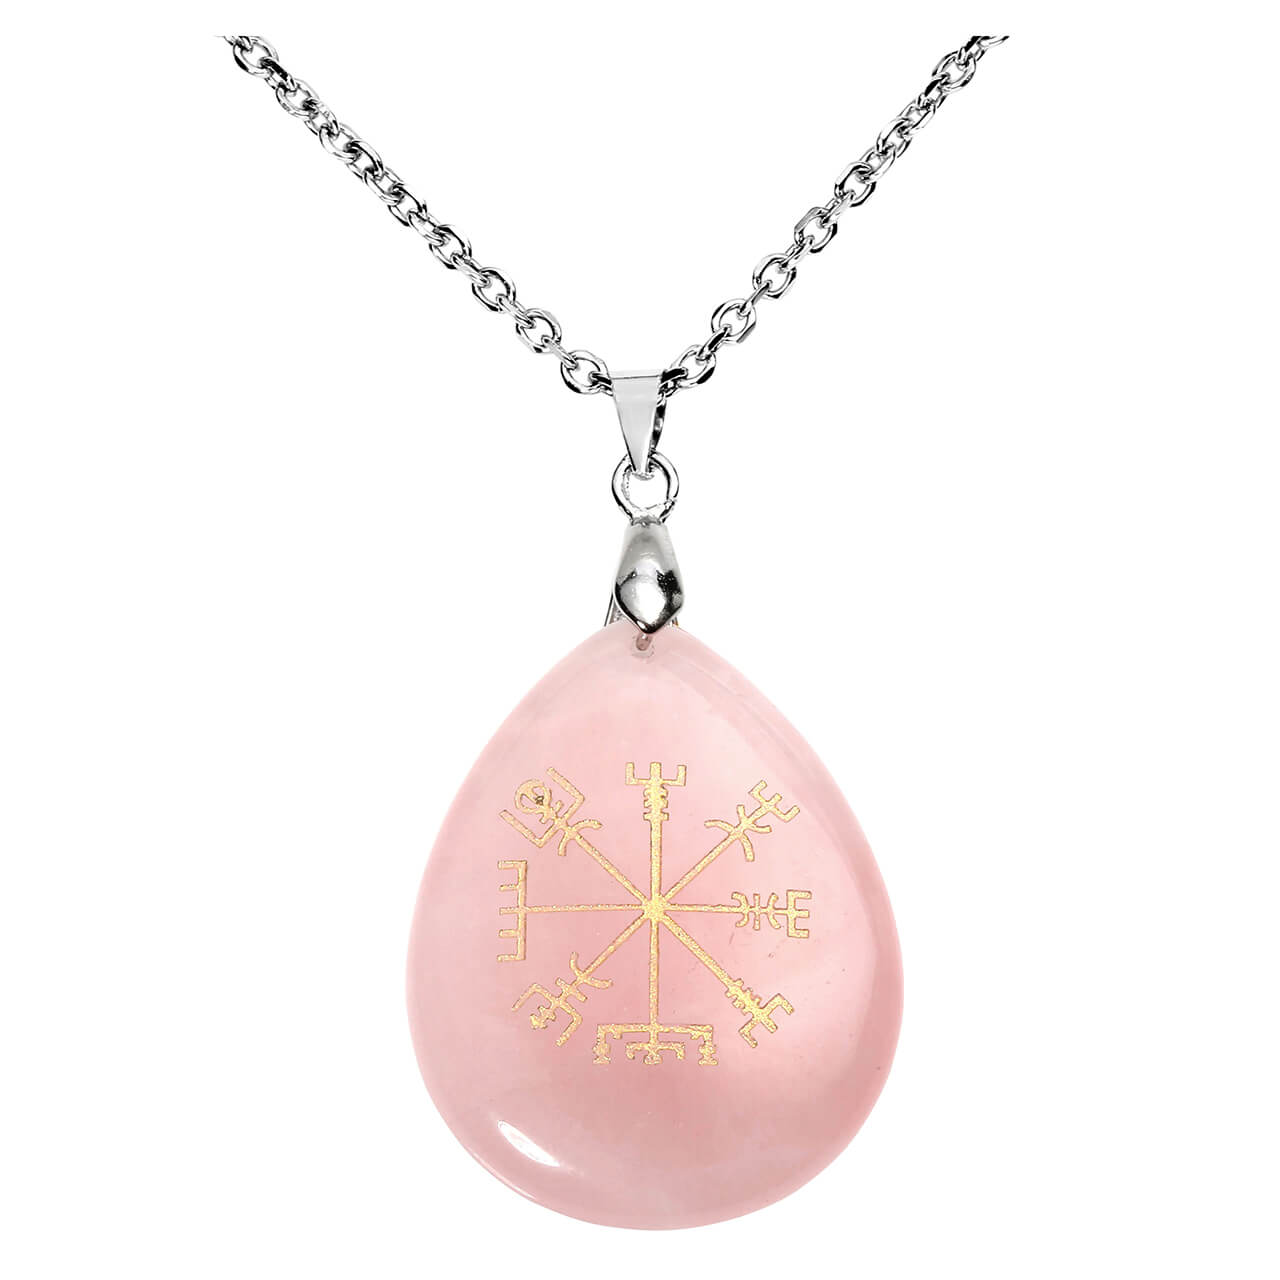 jovivi rose quartz pendant necklace